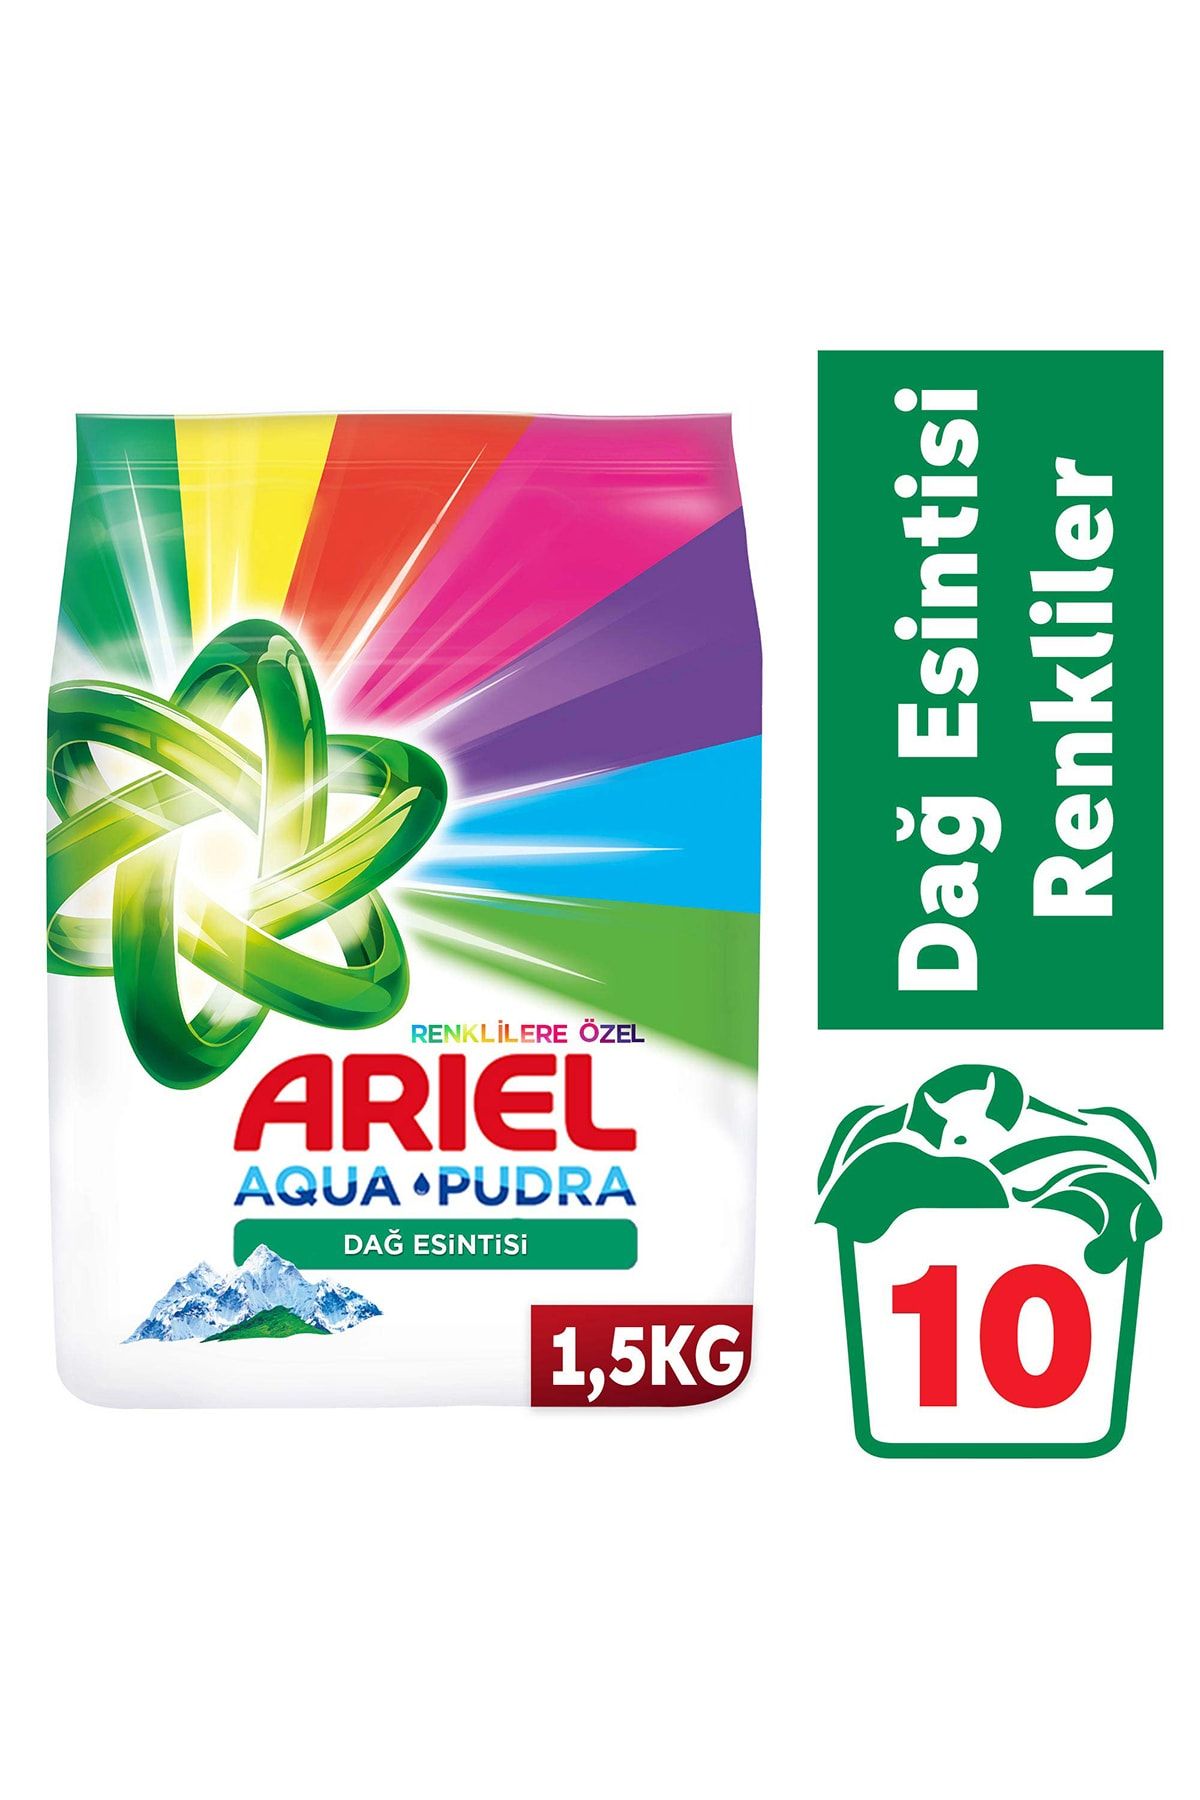 Ariel Dağ Esintisi Renklilere Özel 1,5 Kg Aquapudra Toz Çamaşır Deterjanı